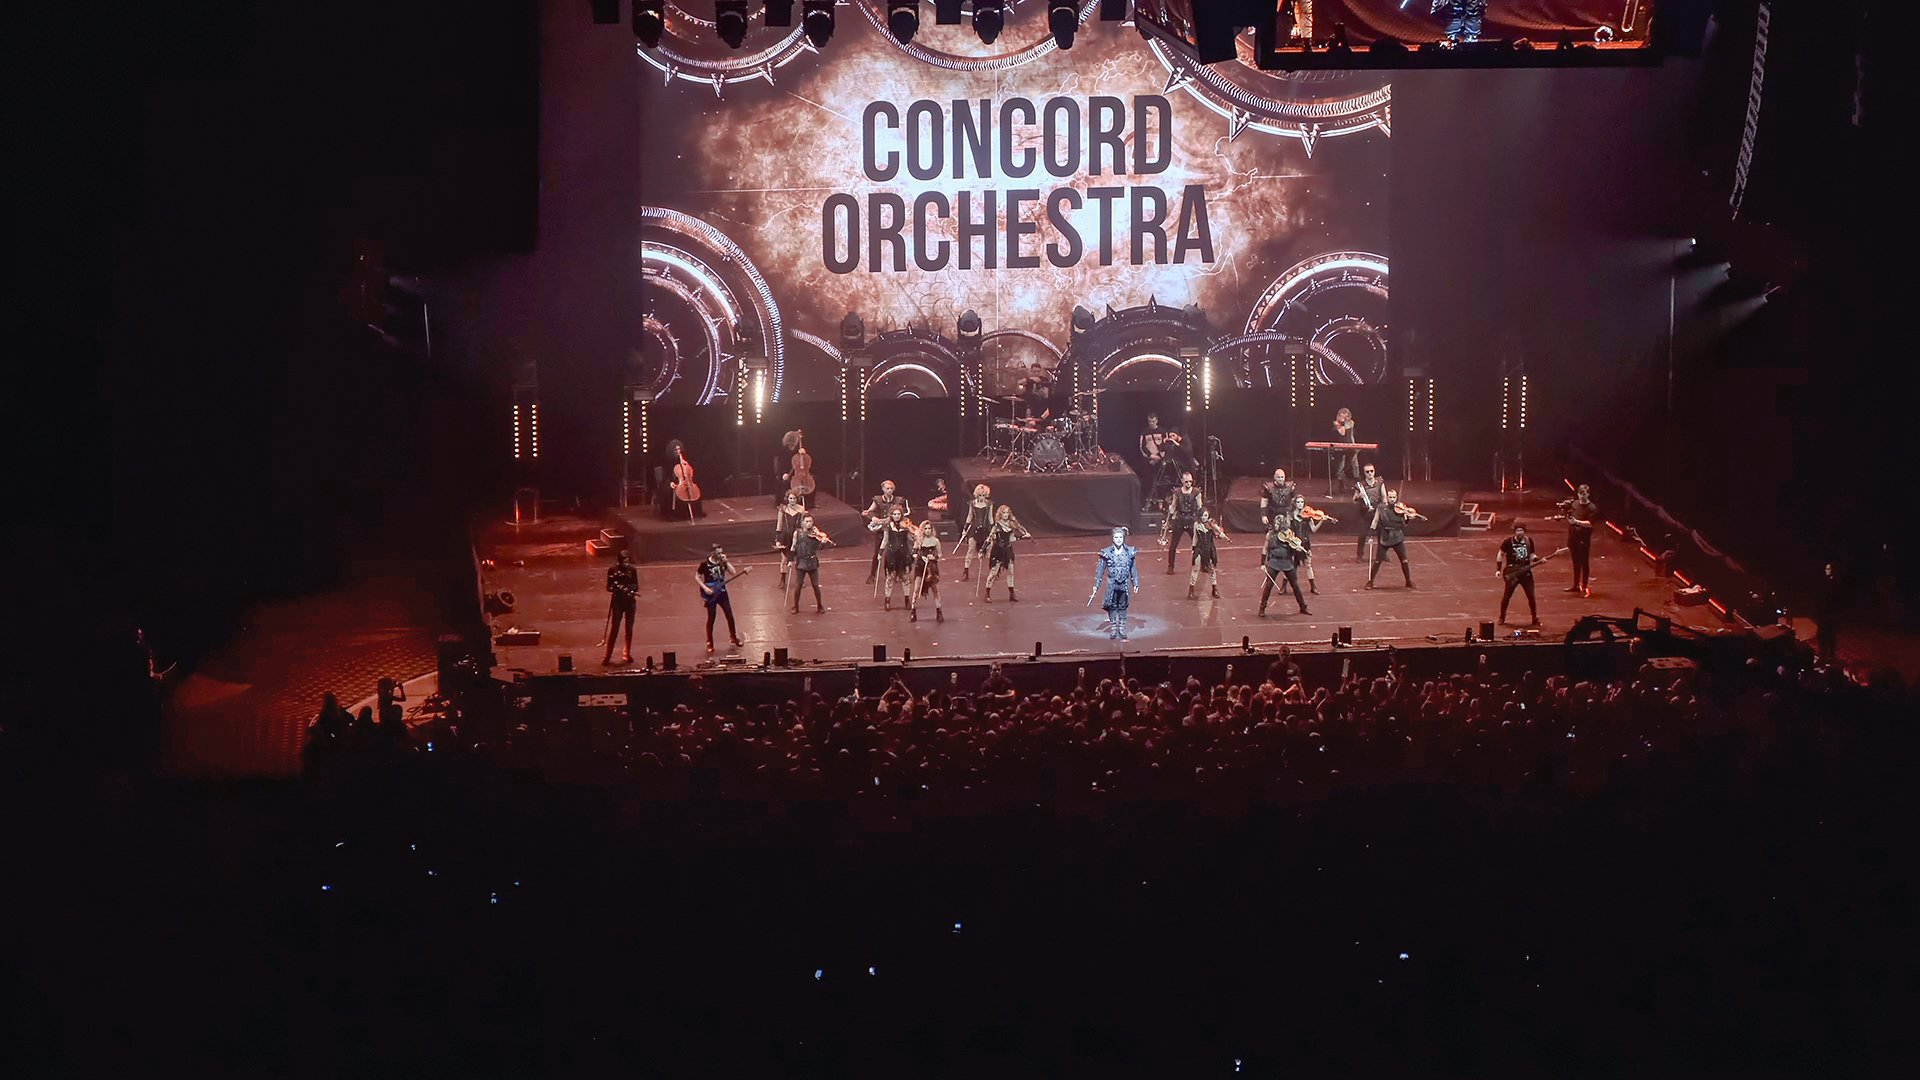 Concord orchestra билеты. Симфонический рок оркестр Конкорд. Concord Orchestra 2022.